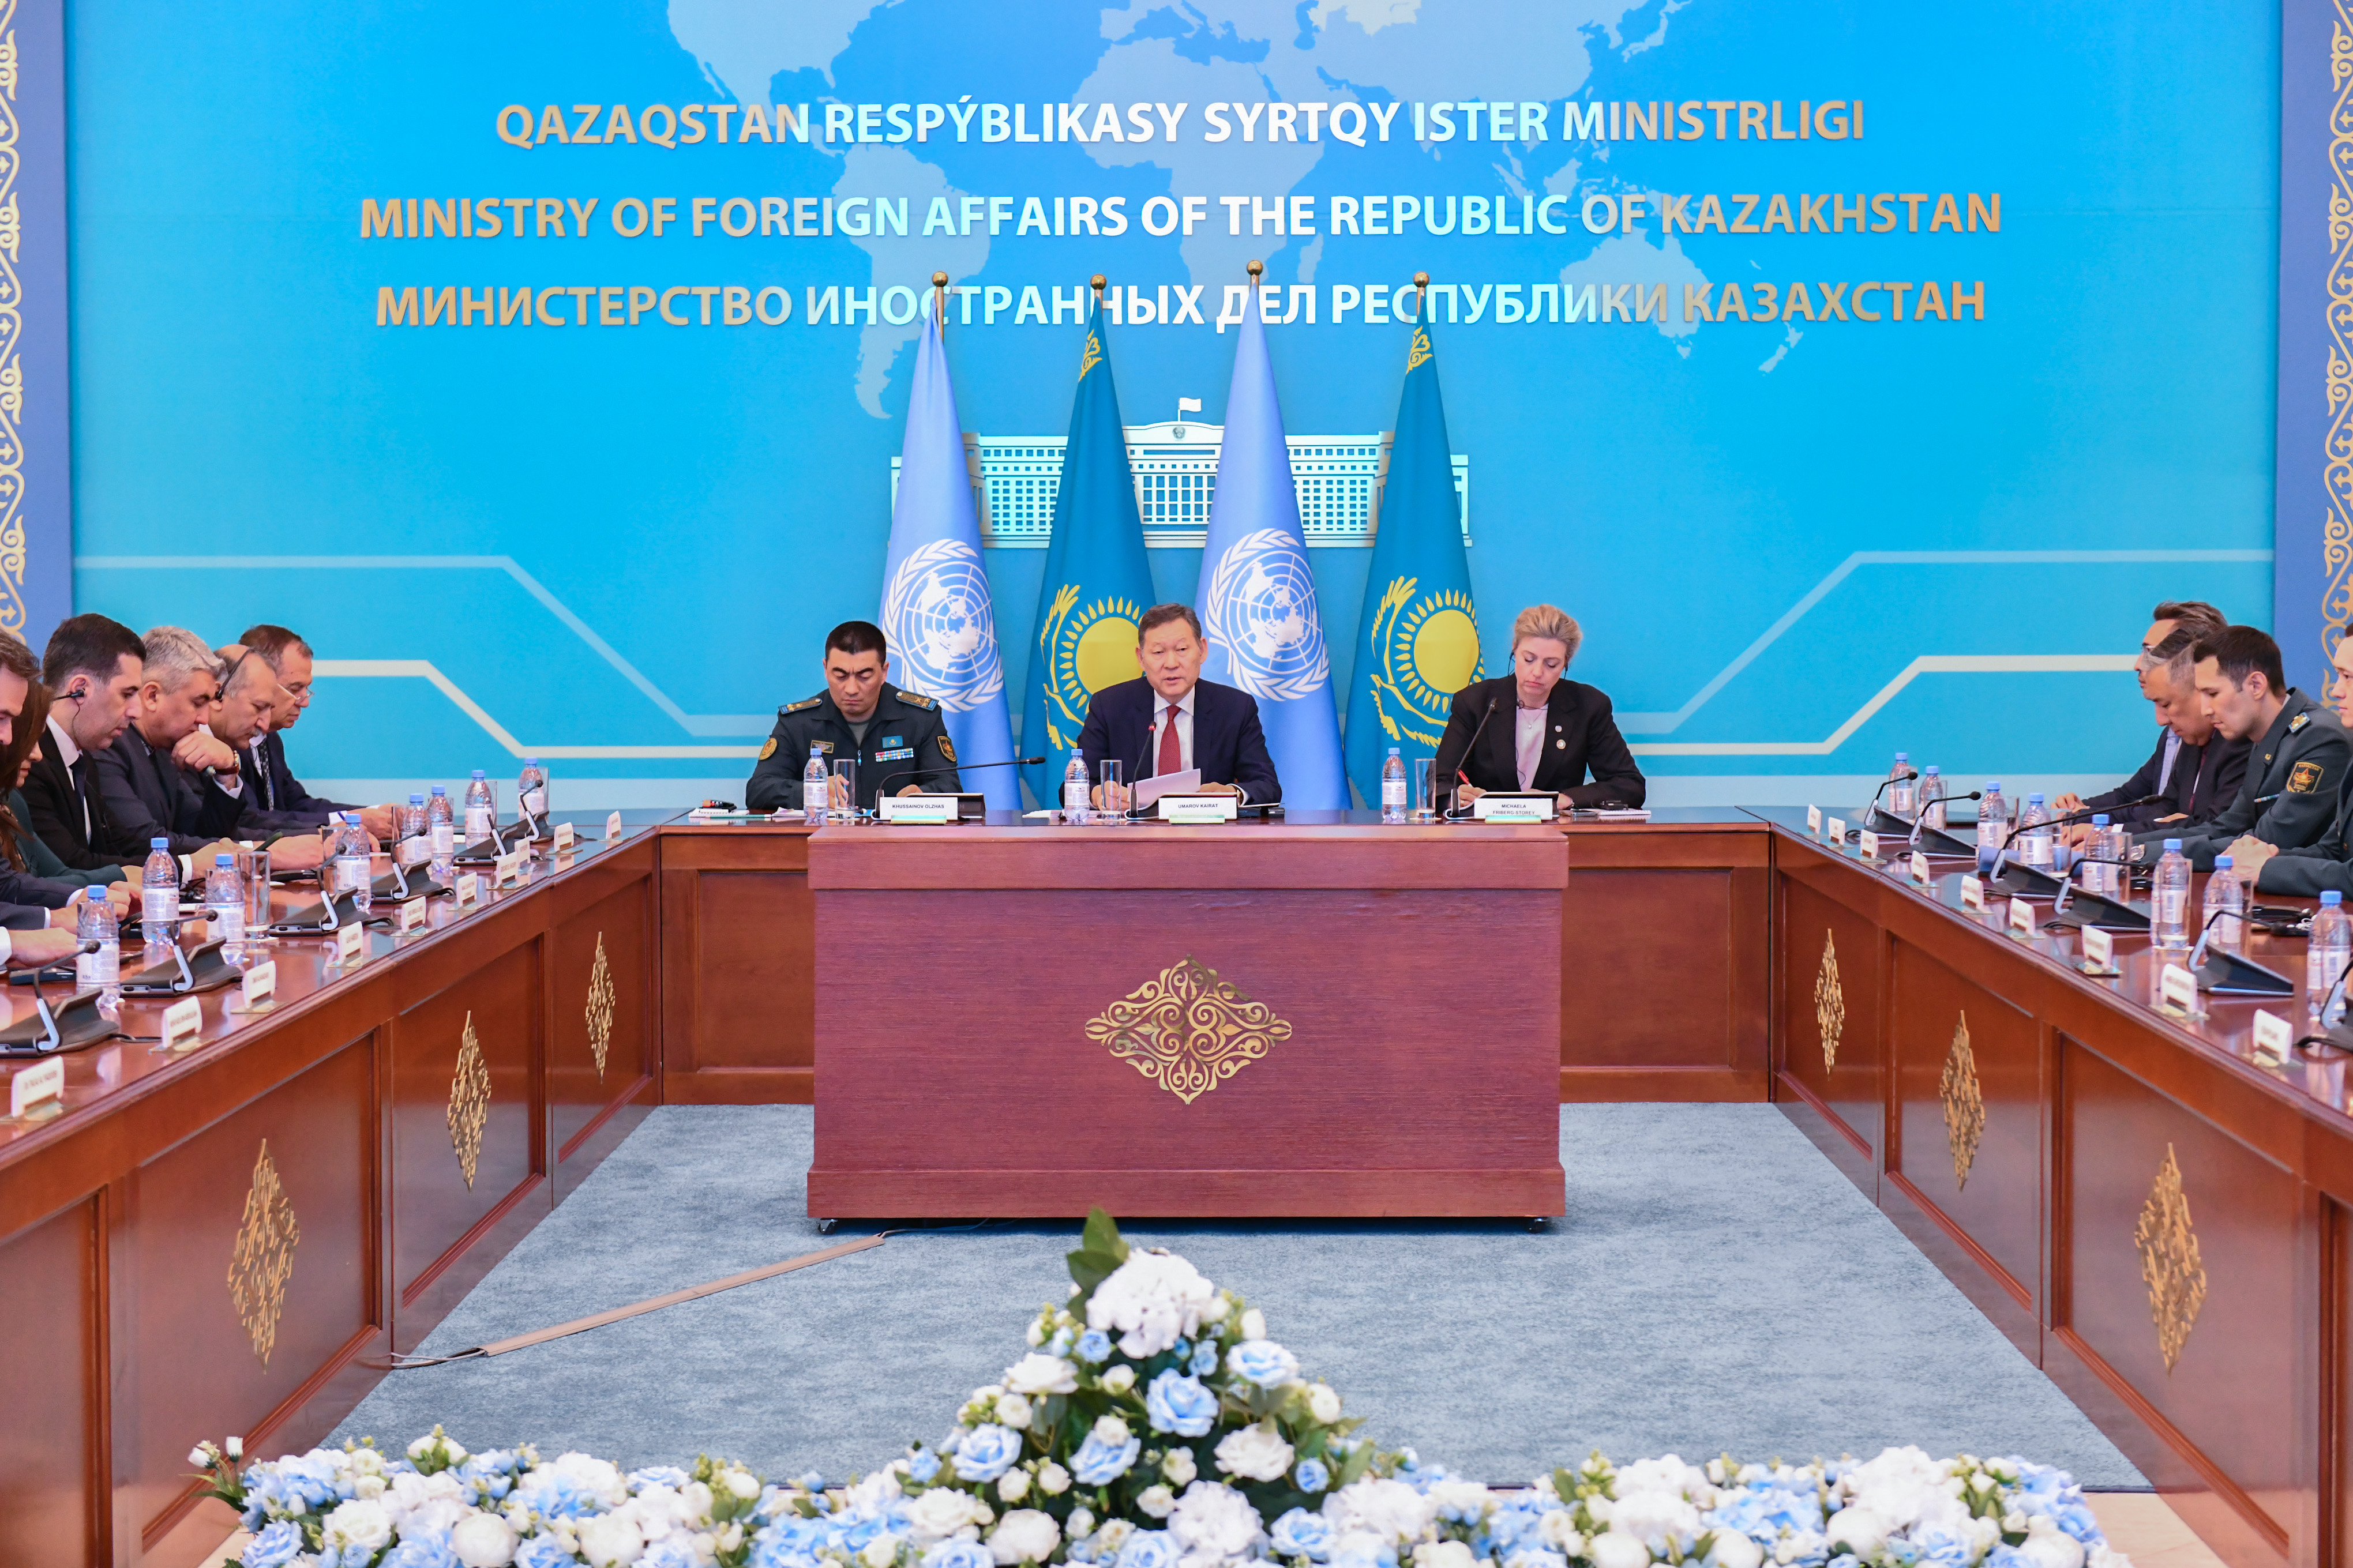 UN Highly Appreciates Kazakhstan's Contribution to Peacekeeping